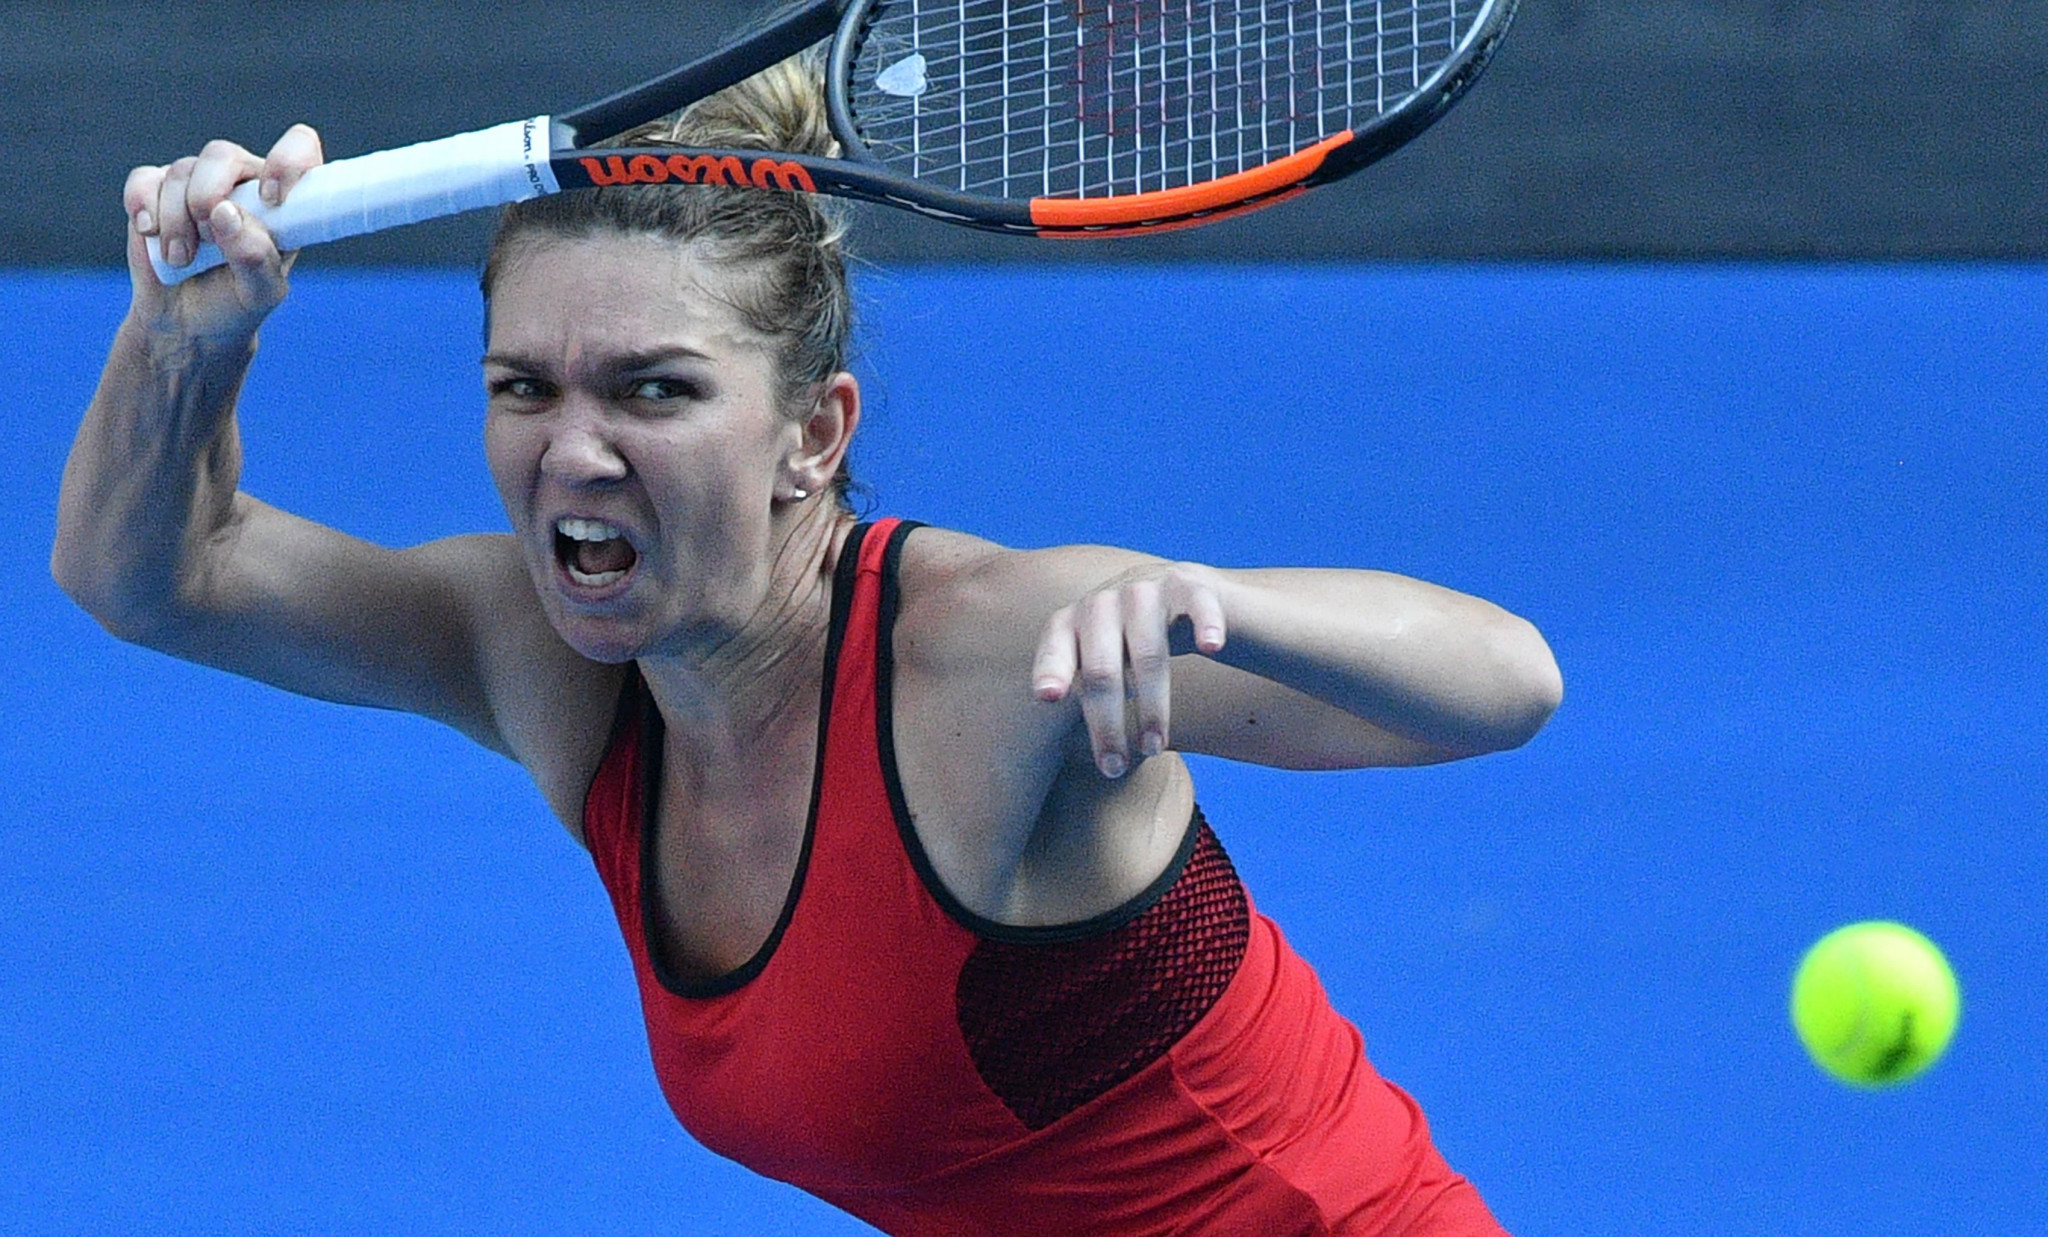 Halep edges Kerber to reach women's singles final at Australian Open